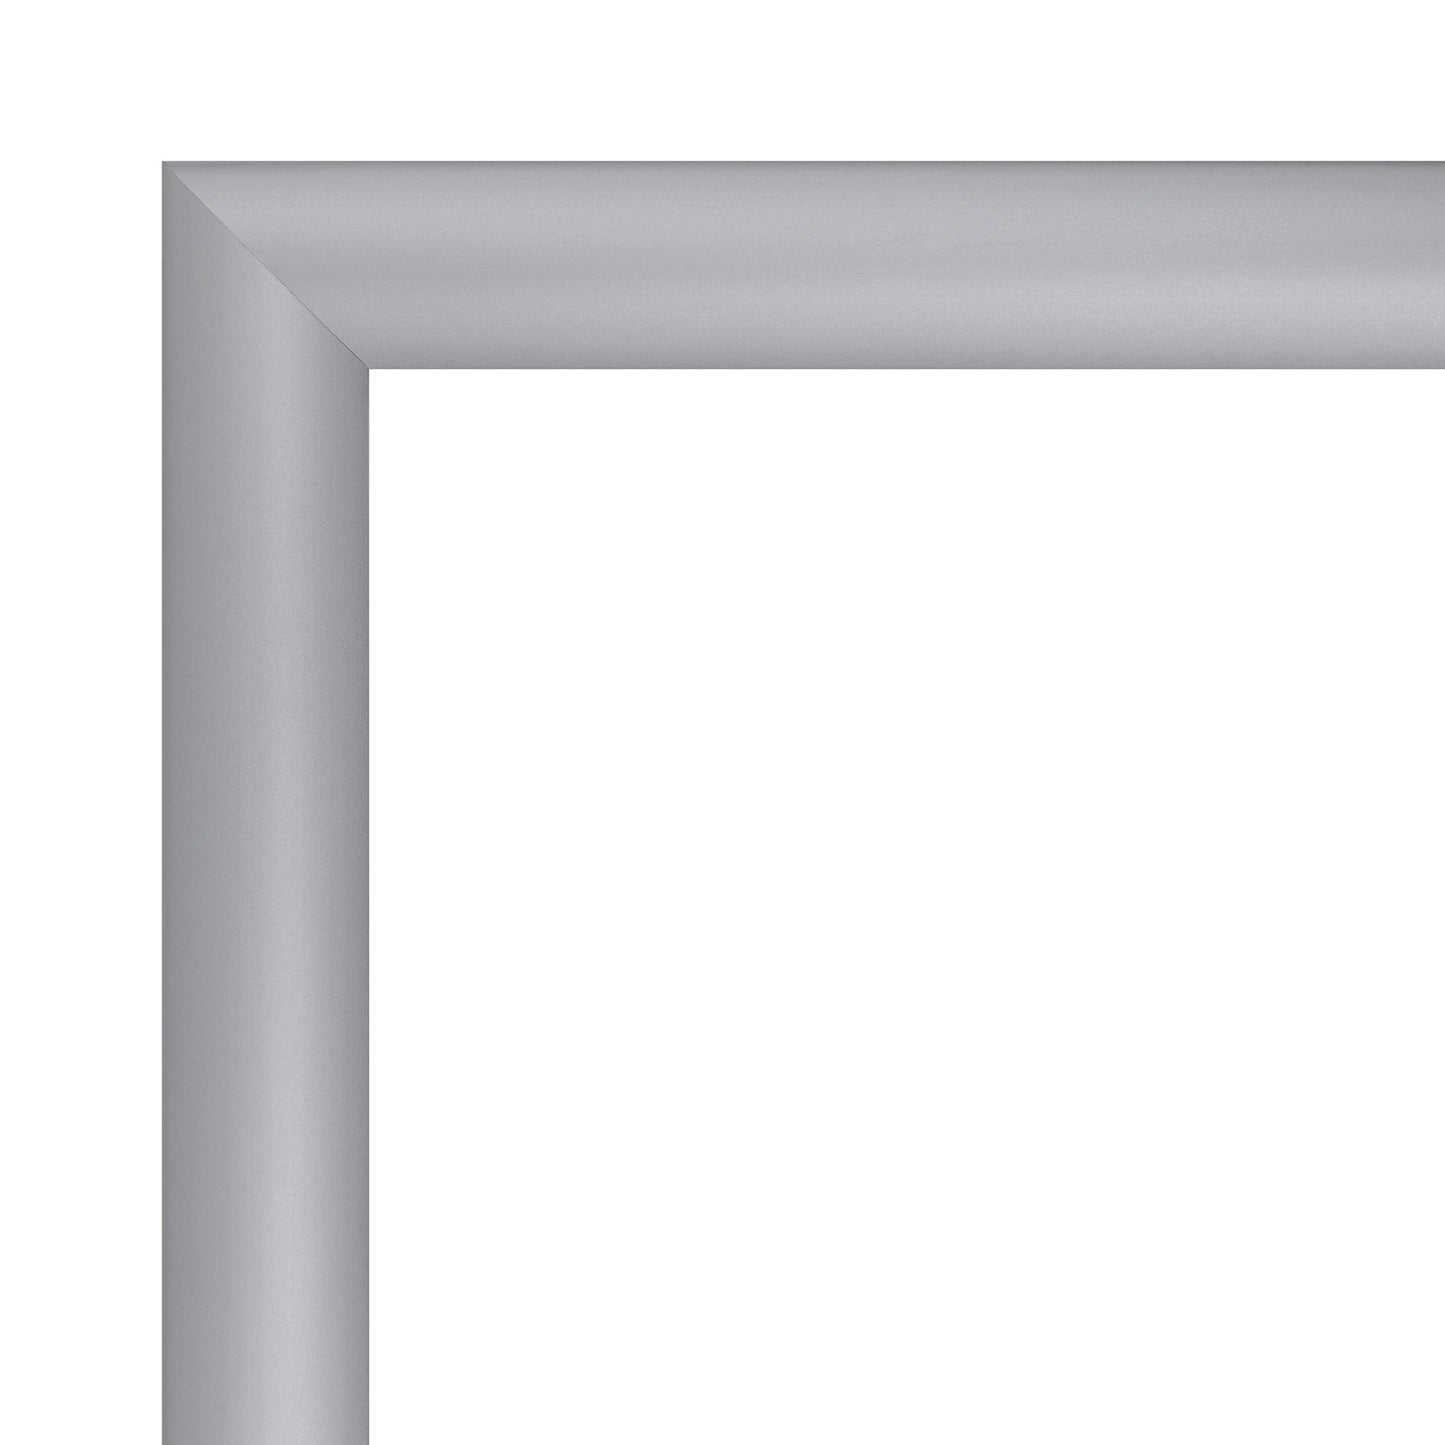 10x18 Silver SnapeZo® Snap Frame - 1.2" Profile - Snap Frames Direct